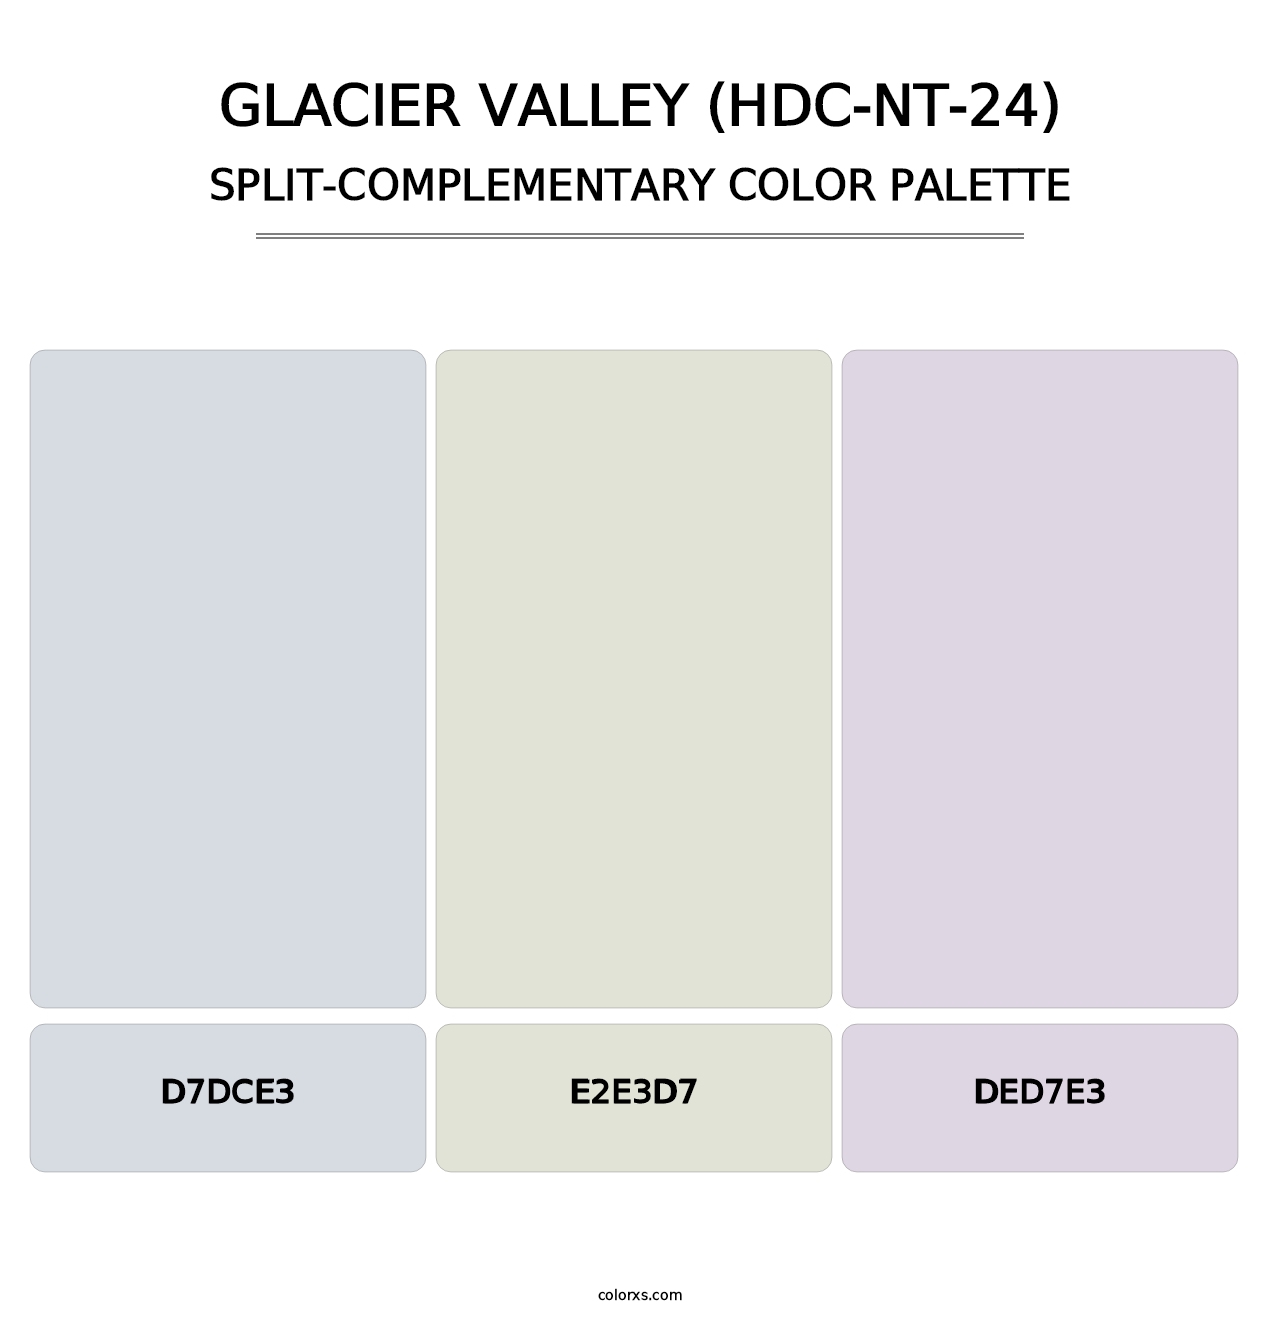 Glacier Valley (HDC-NT-24) - Split-Complementary Color Palette